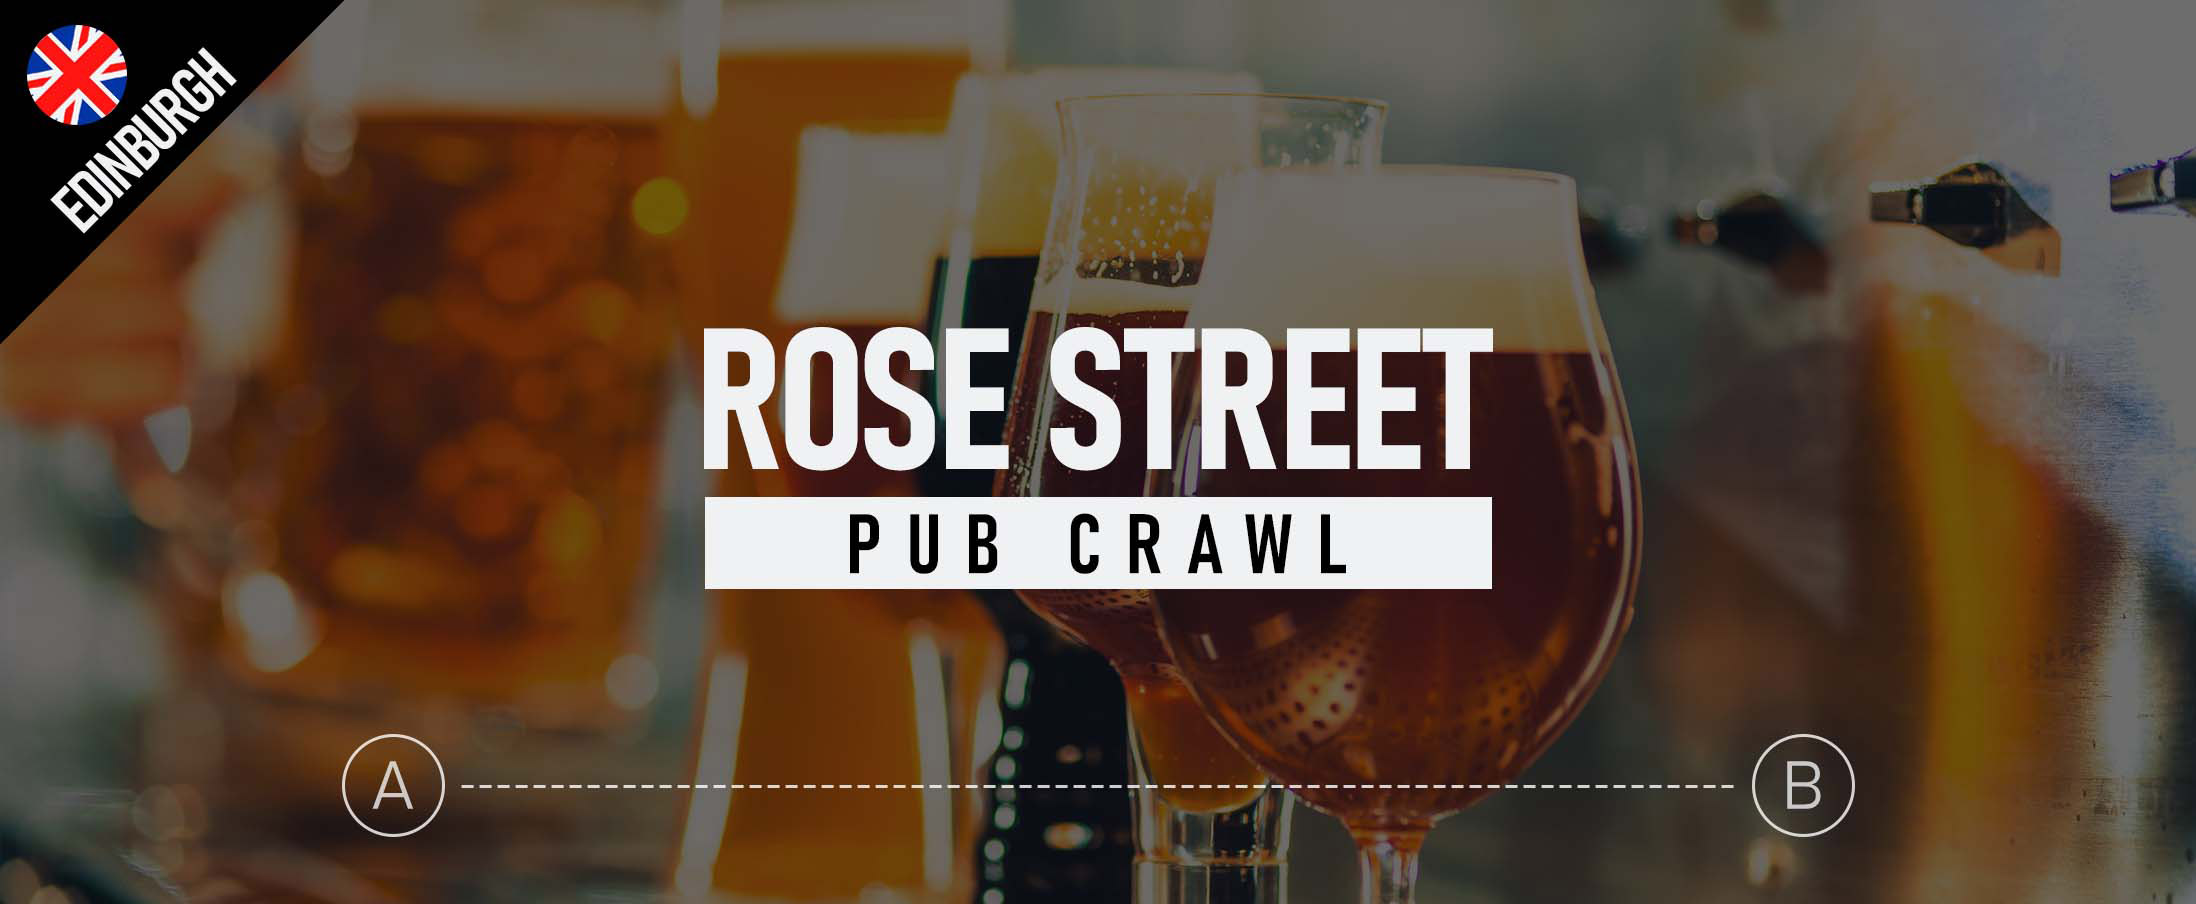 Edinburgh Rose Street Pub Crawl